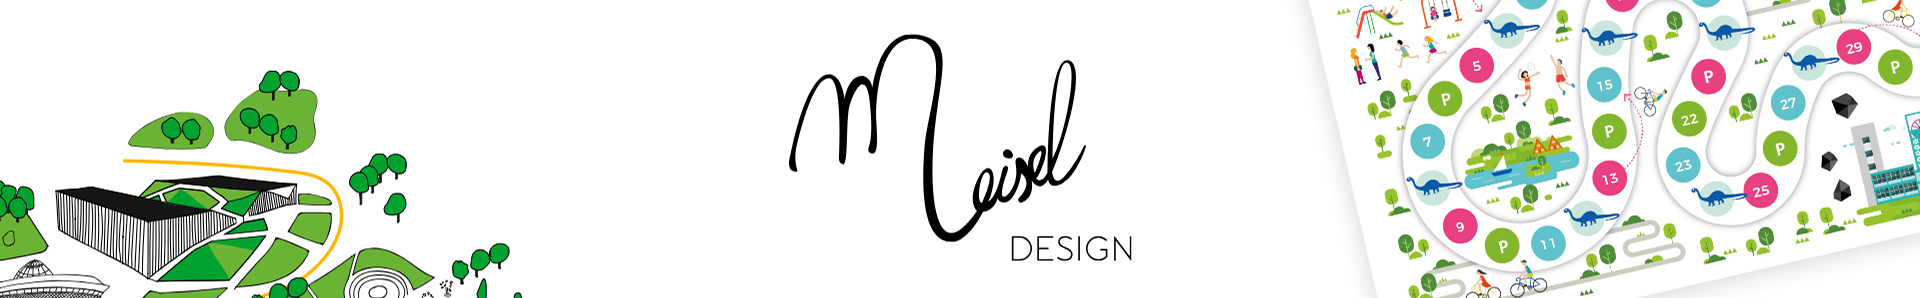 Meisel design's profile banner